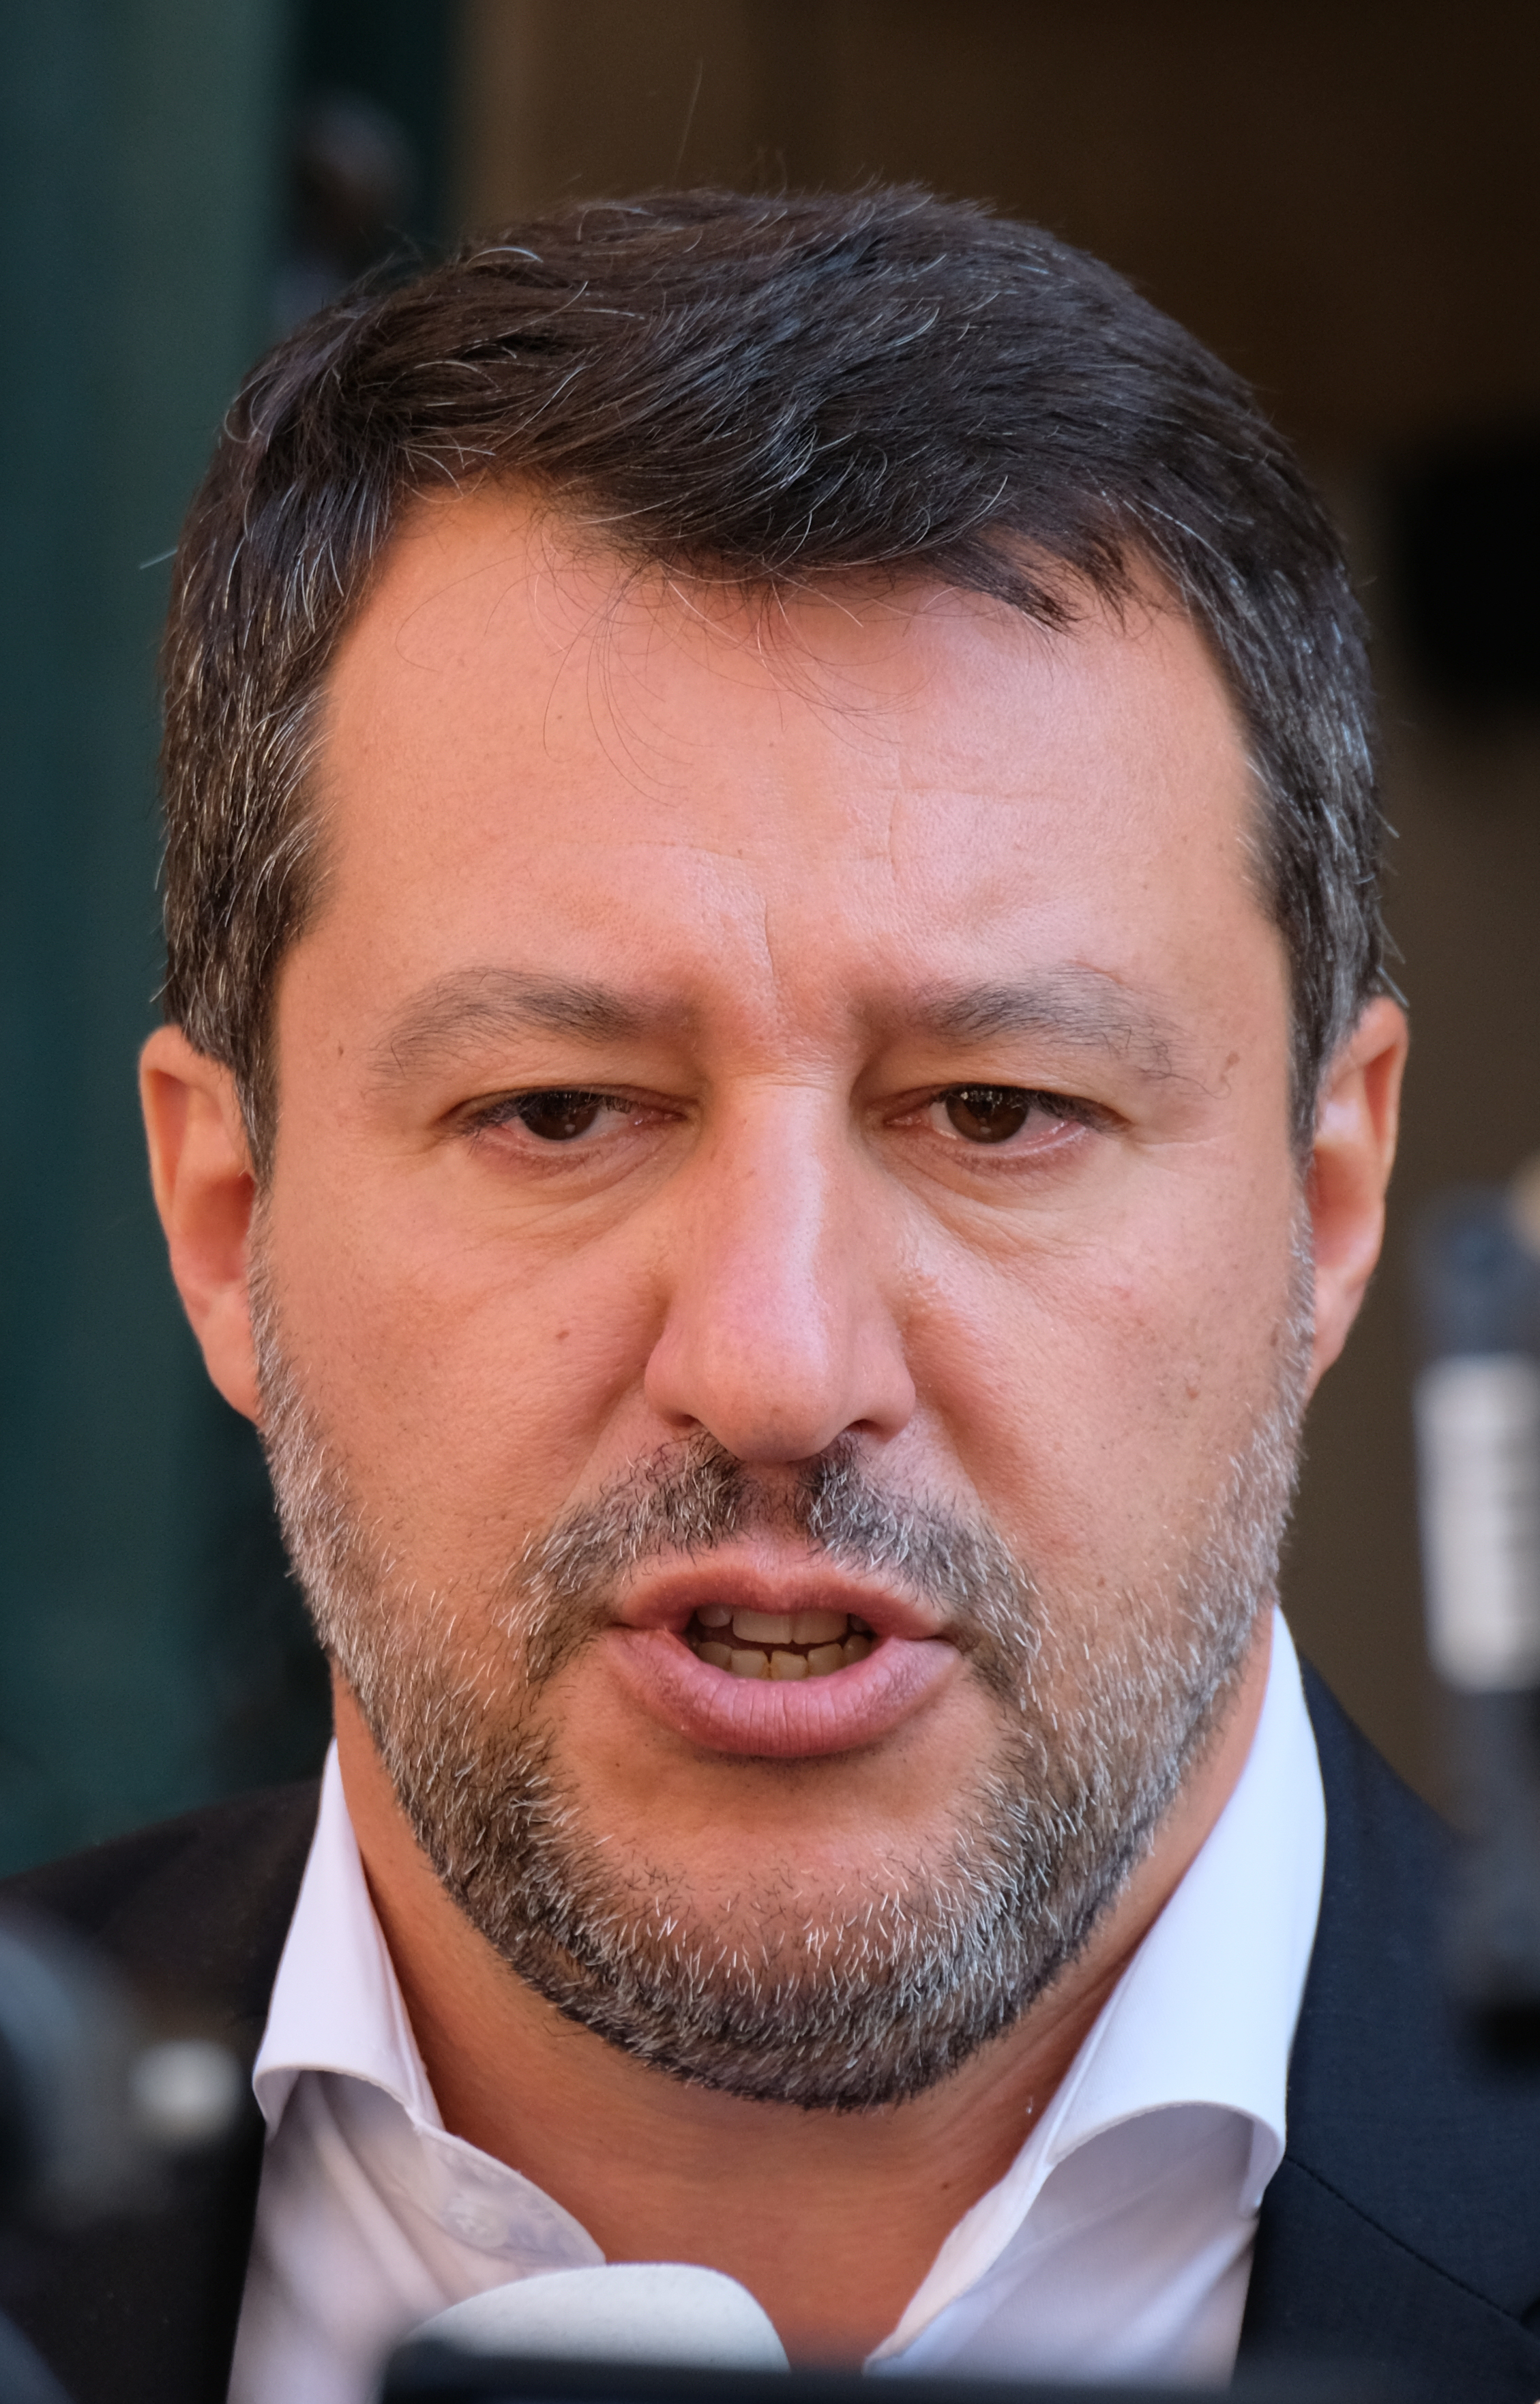 Matteo Salvini - Italian politician